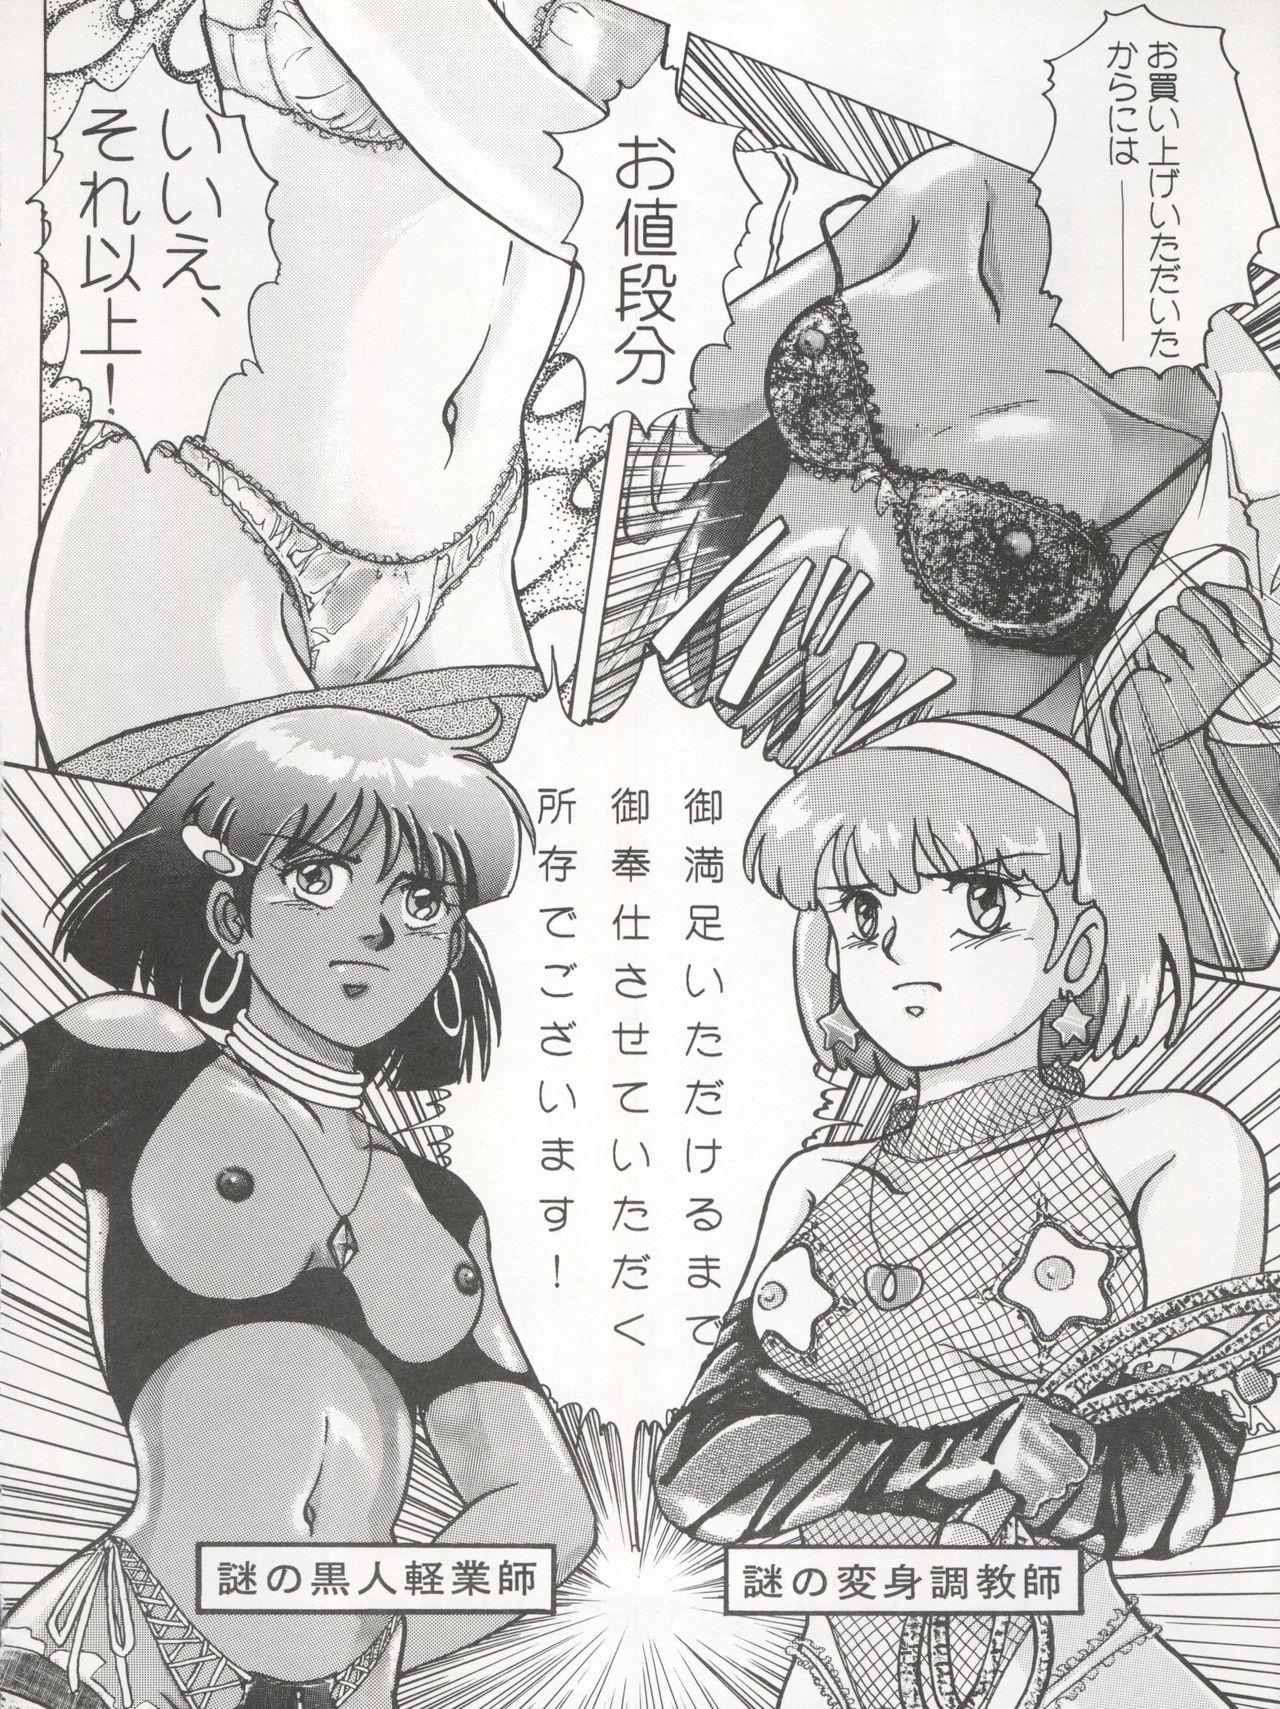 African 逮捕されちゃうぞ - Fushigi no umi no nadia Youre under arrest Minky momo 3x3 eyes Blowing - Page 4